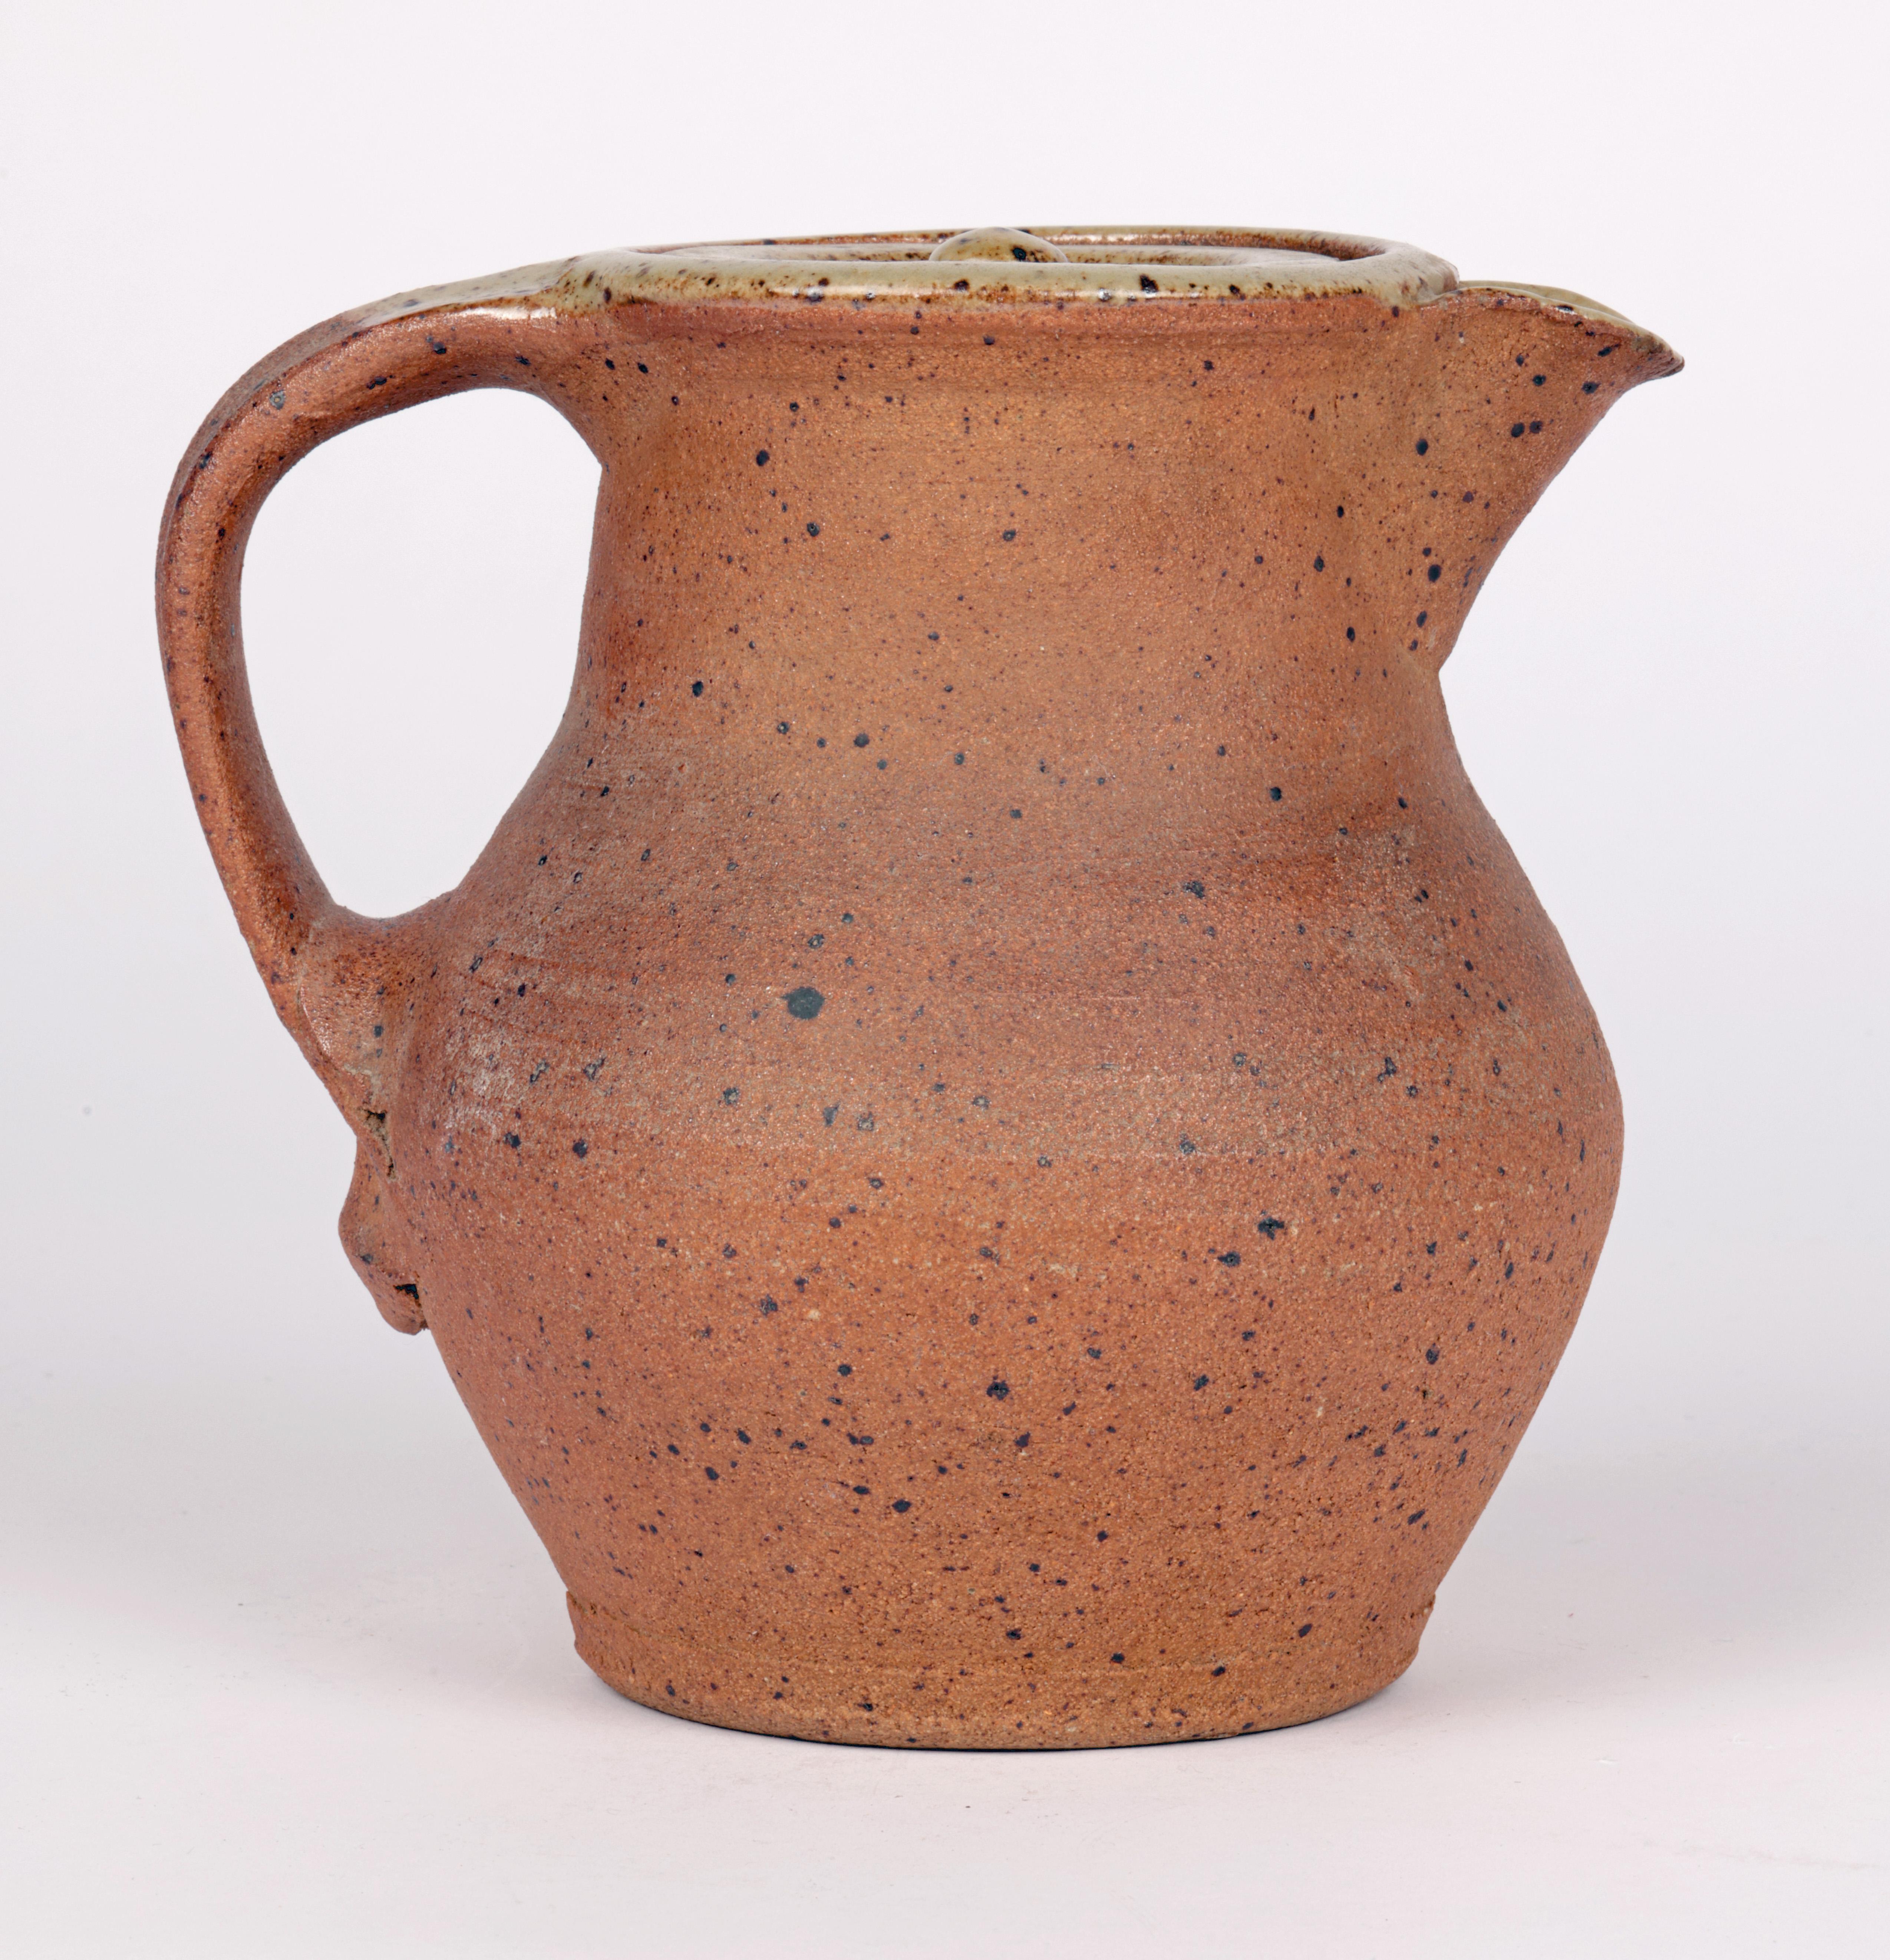 bernard leach pottery marks